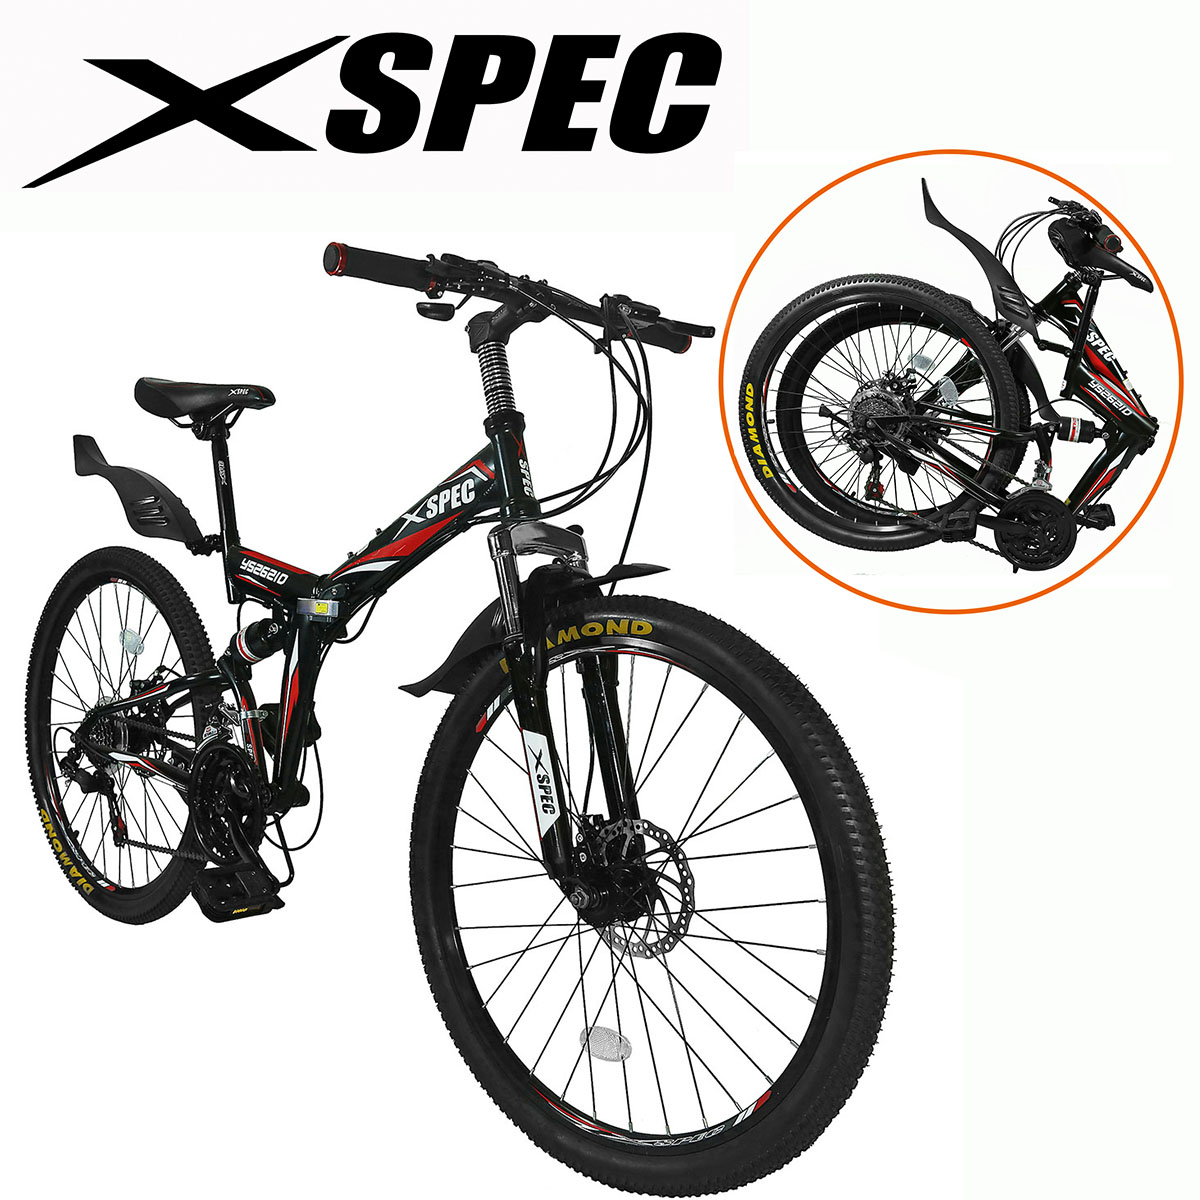 Xspec 7 Speed 26″ Folding Compact Mountain Bike